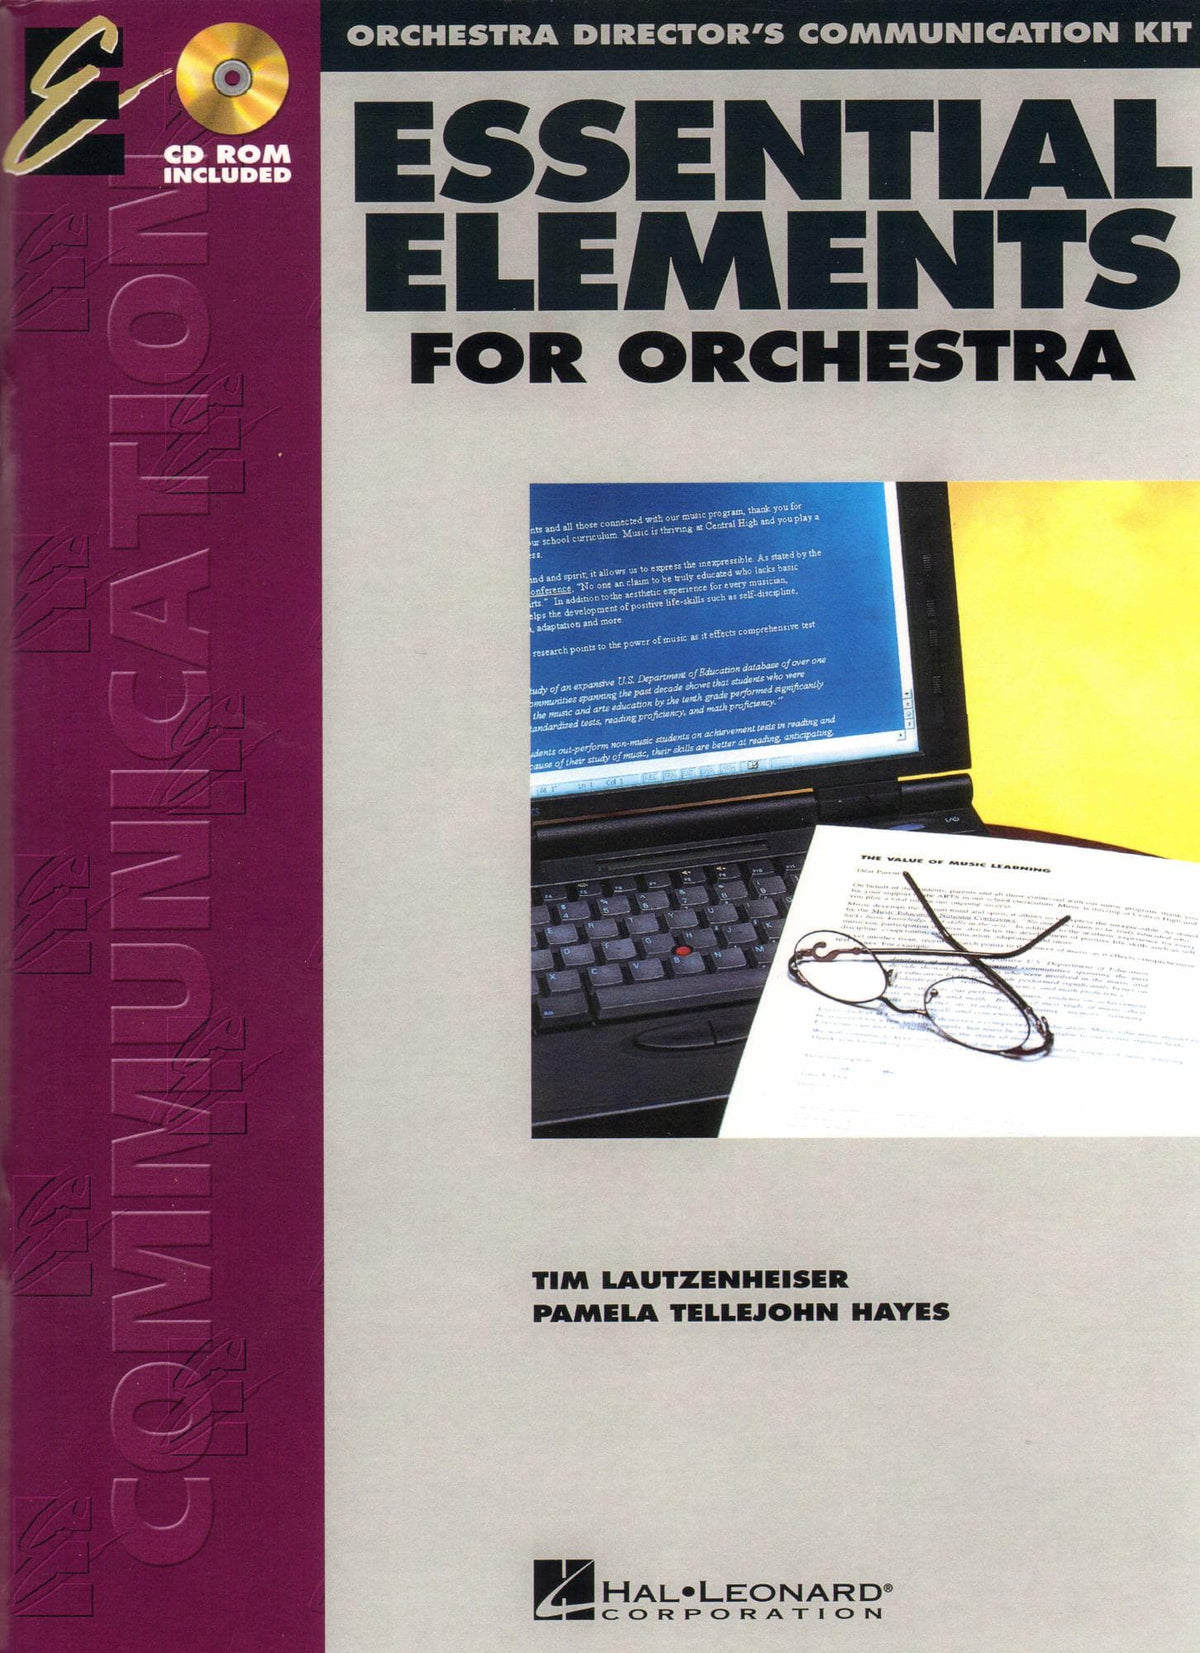 Essential Elements for Strings - Orchestra Director's Communication Kit - by Tim Lautzenheiser and Pamela Tellejohn Hayes - Hal Leonard Publication